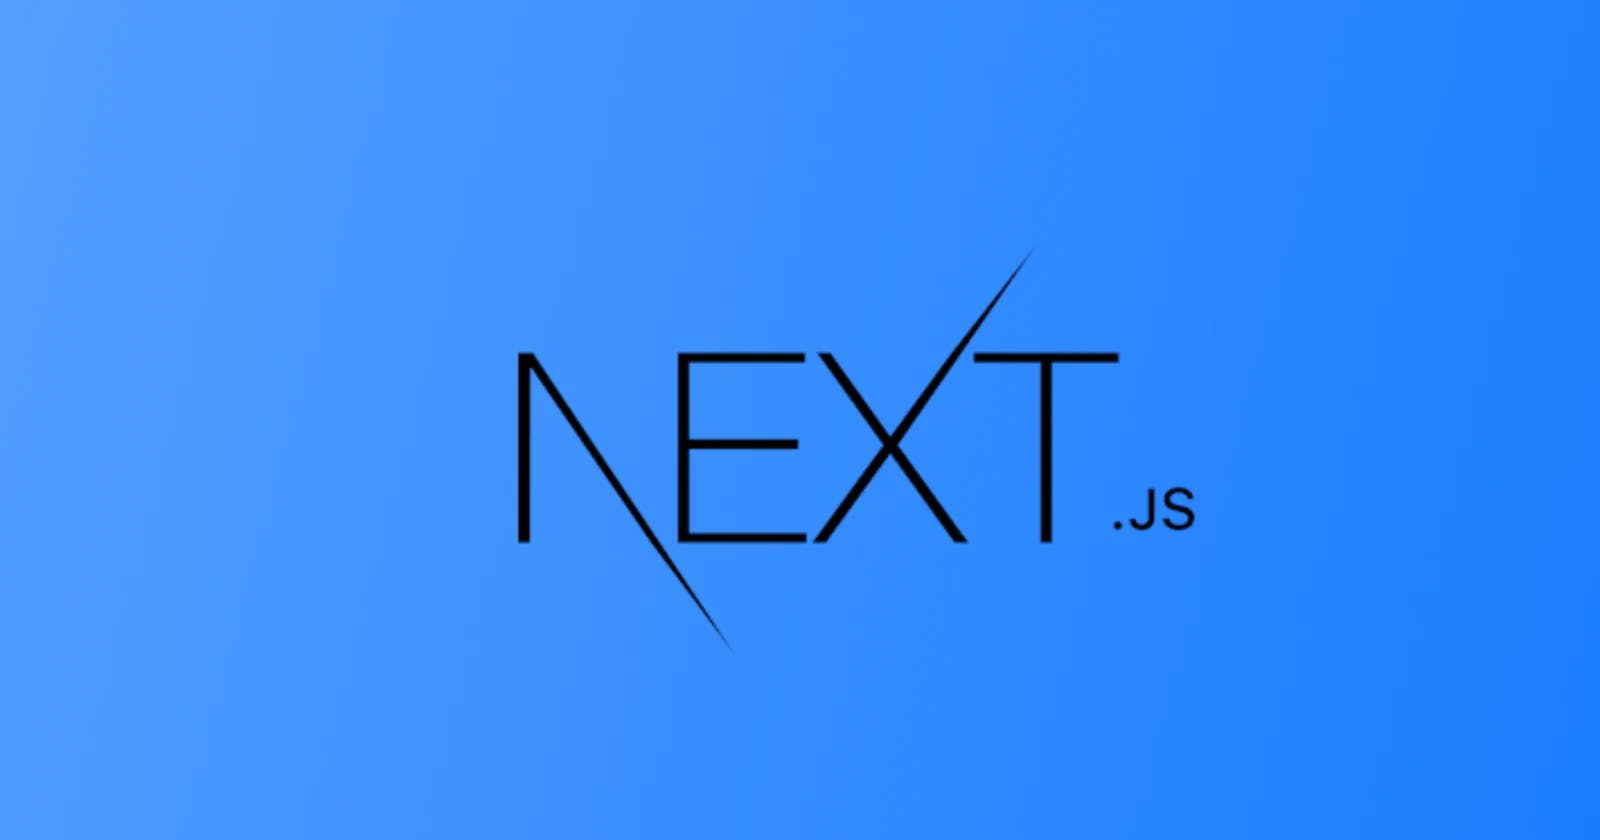 Why use NextJS?